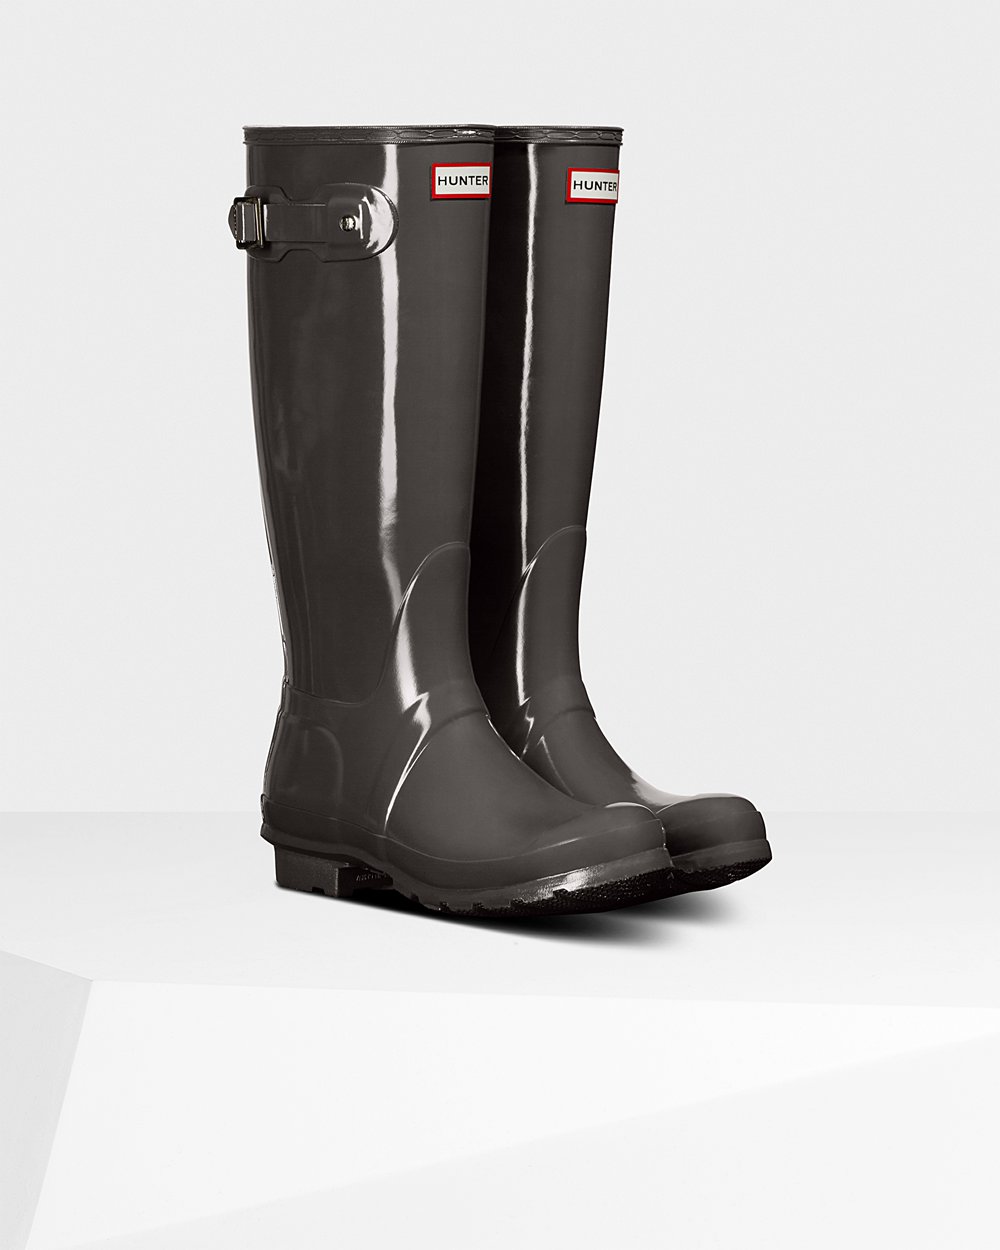 Womens Tall Rain Boots - Hunter Original Gloss (29SKQVTXU) - Grey